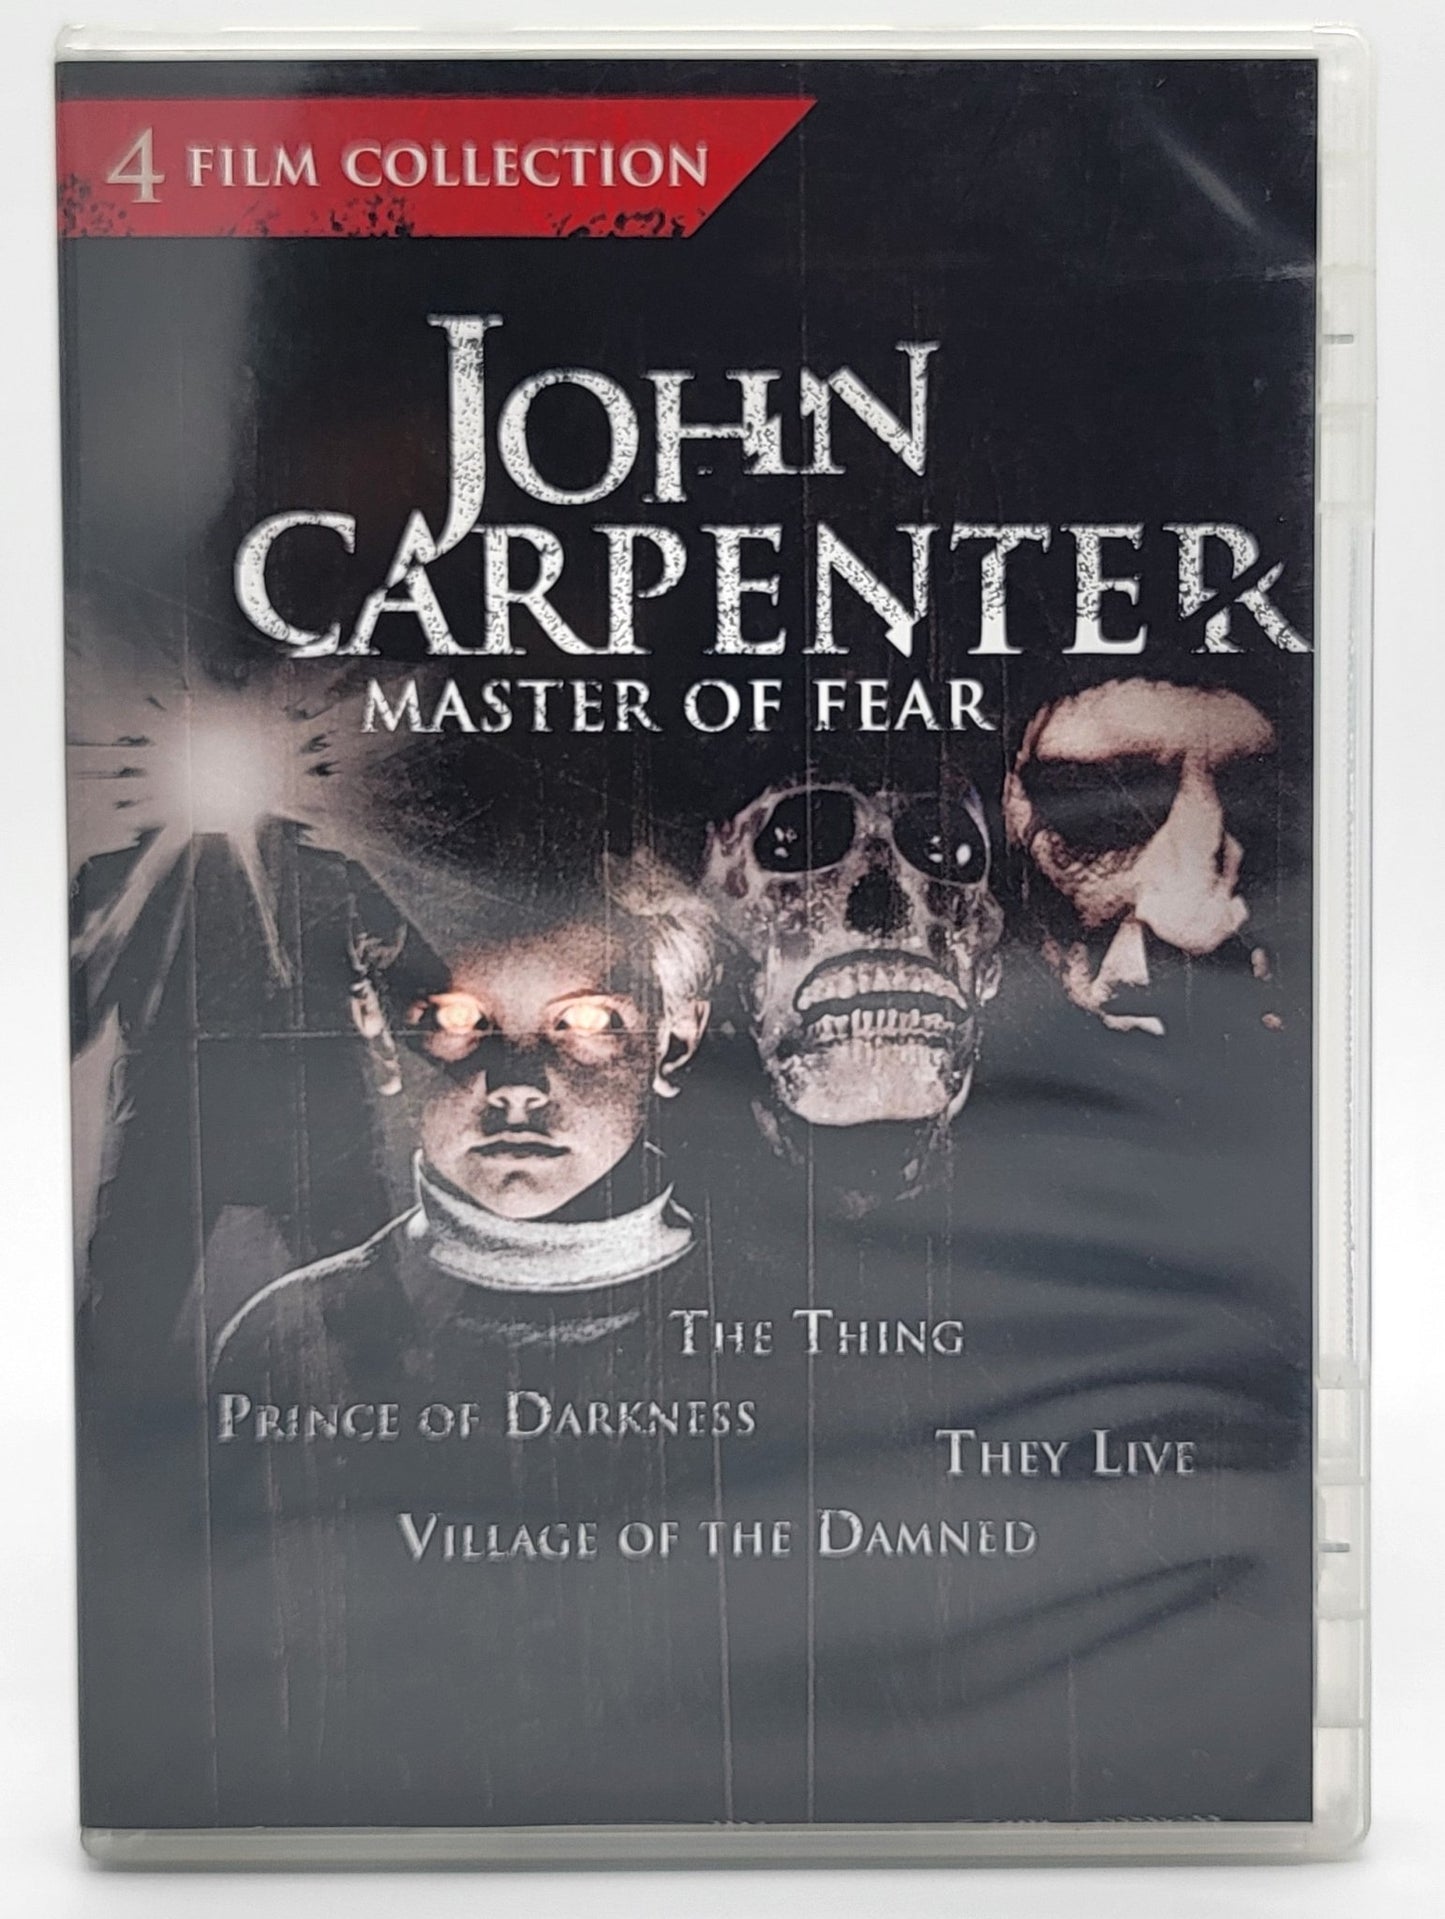 Universal Studios Home Entertainment - John Carpenter Master of Fear - 4 Film Collection | DVD | 2 Disc Set - 4 Movies - DVD - Steady Bunny Shop